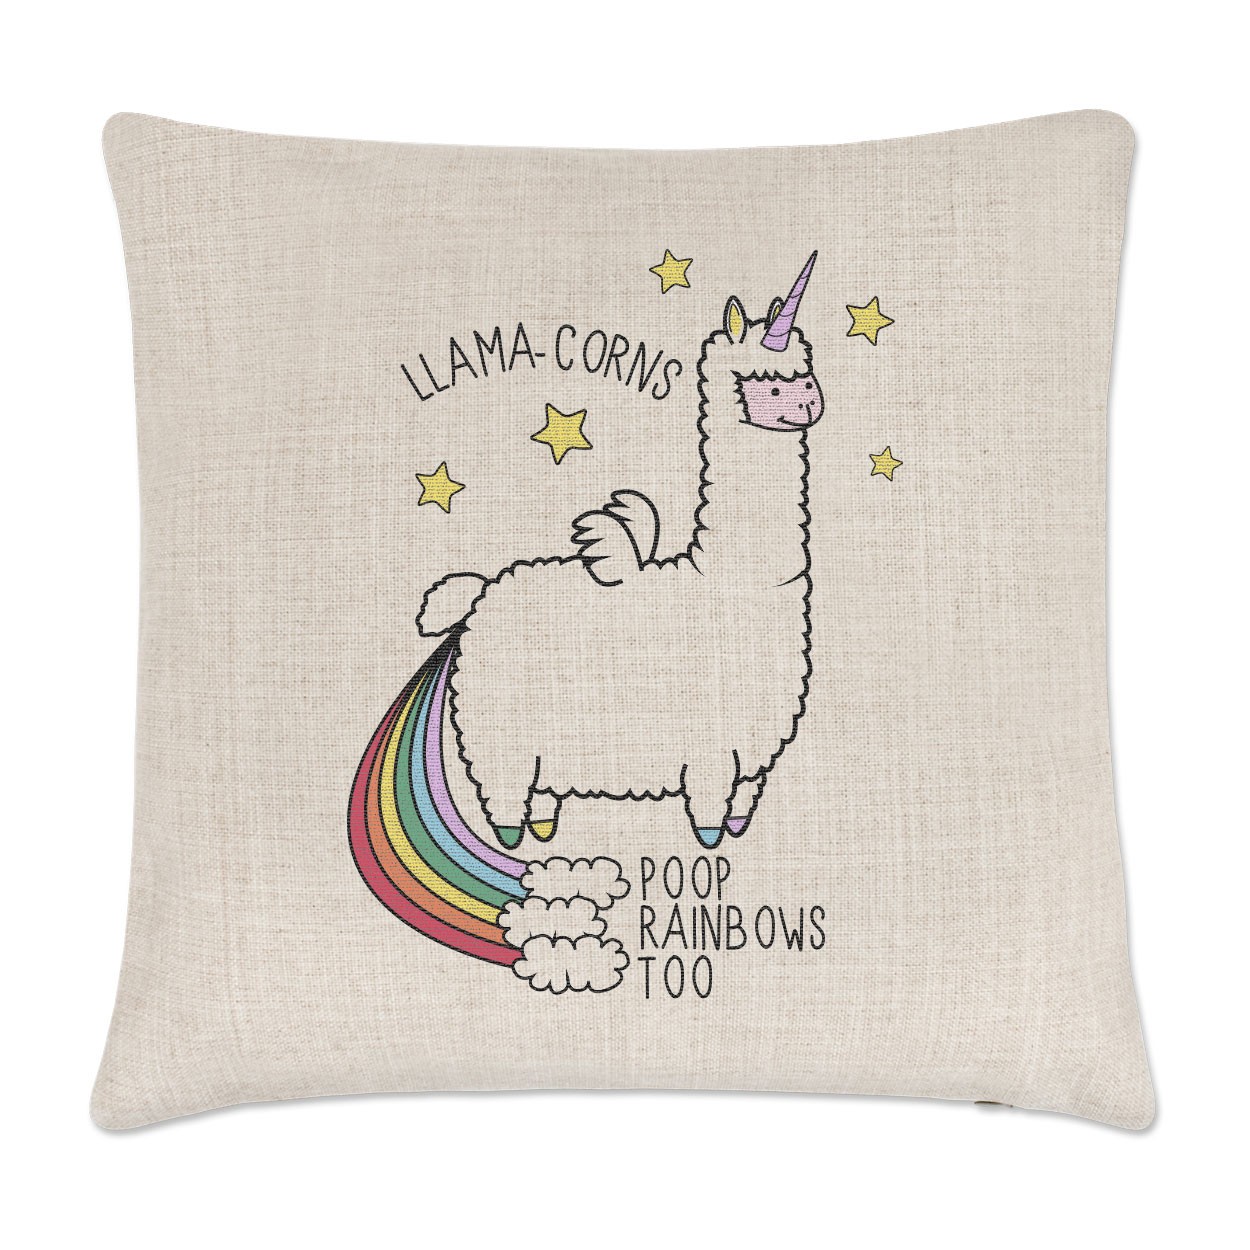 Llama-corns Poop Rainbows Too Linen Cushion Cover